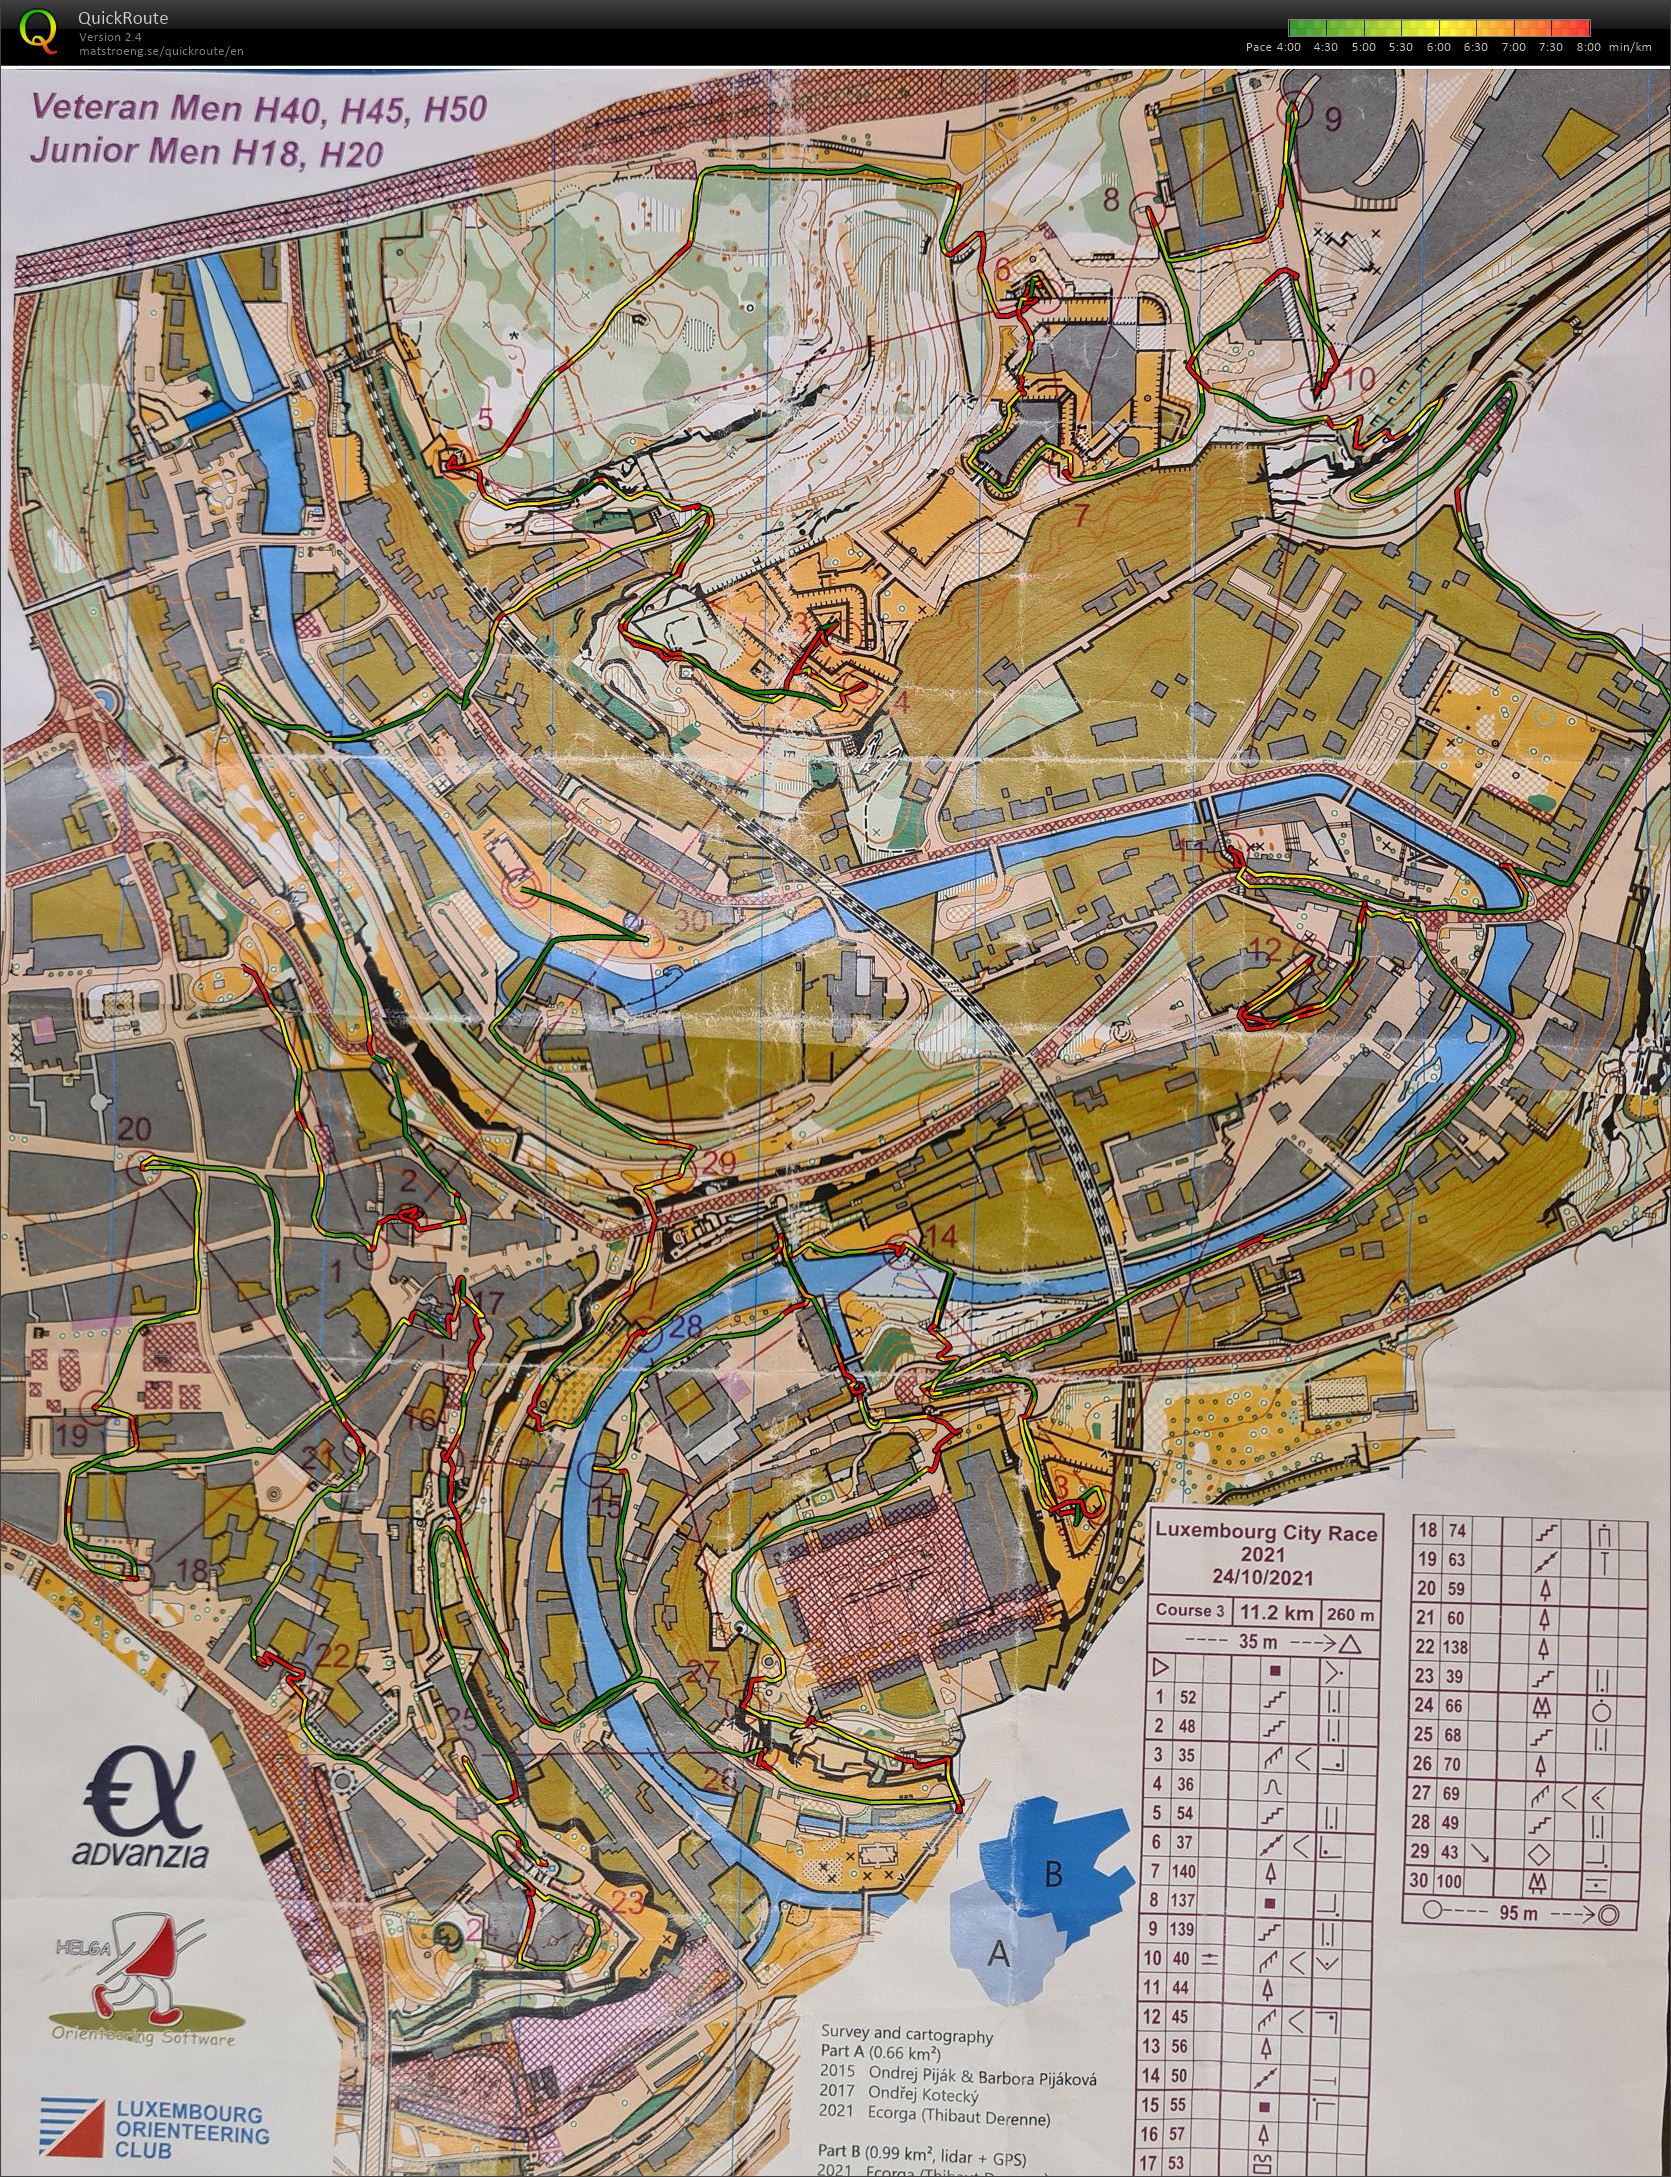 Luxemburg City Race, Long, M50 (2021-10-24)